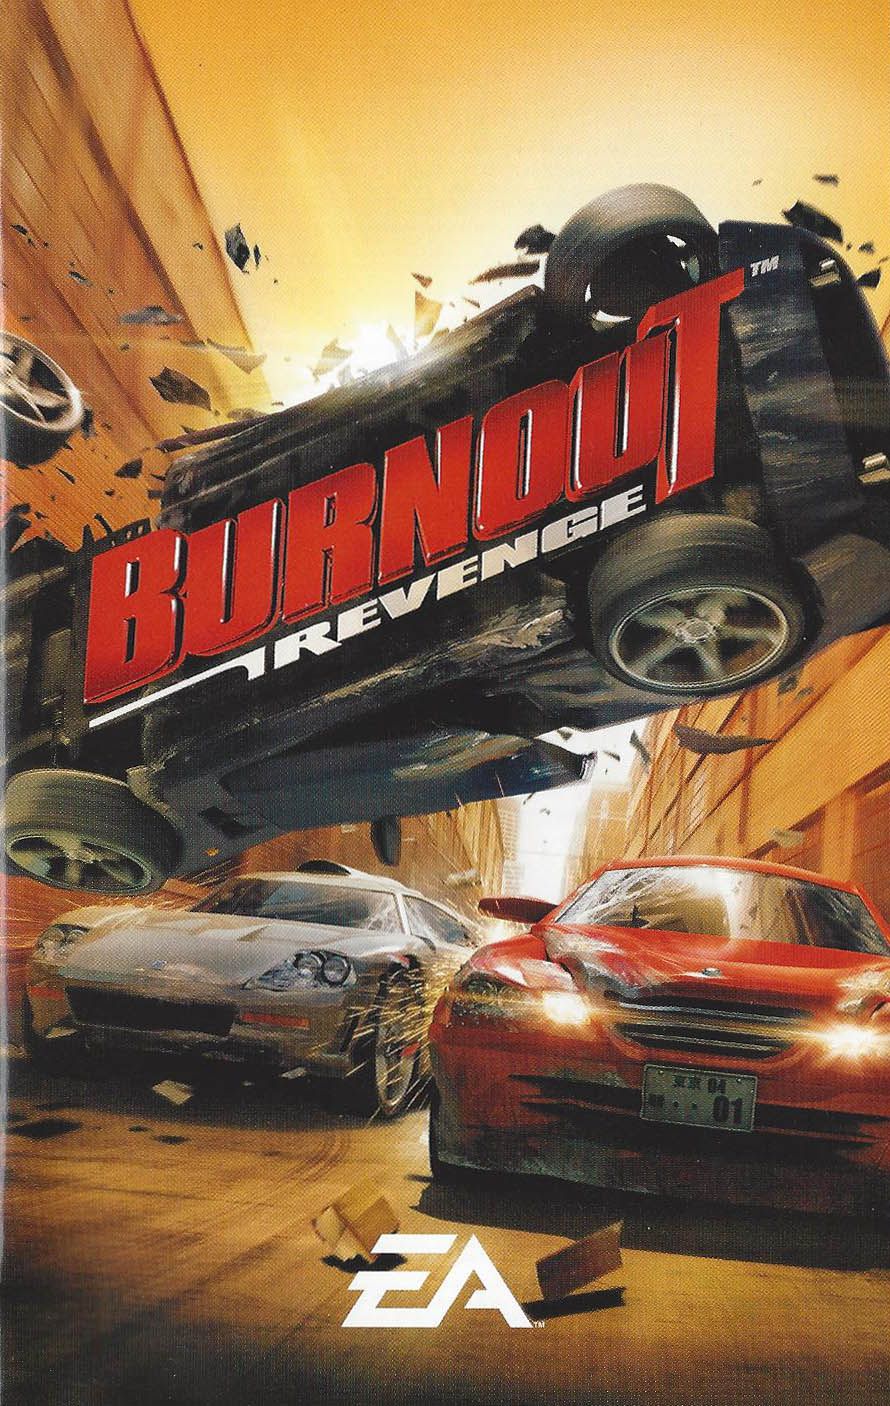 Burnout Revenge. Fondos de pantalla de juegos, Juegos de carreras, Descargas de fondos de pantalla